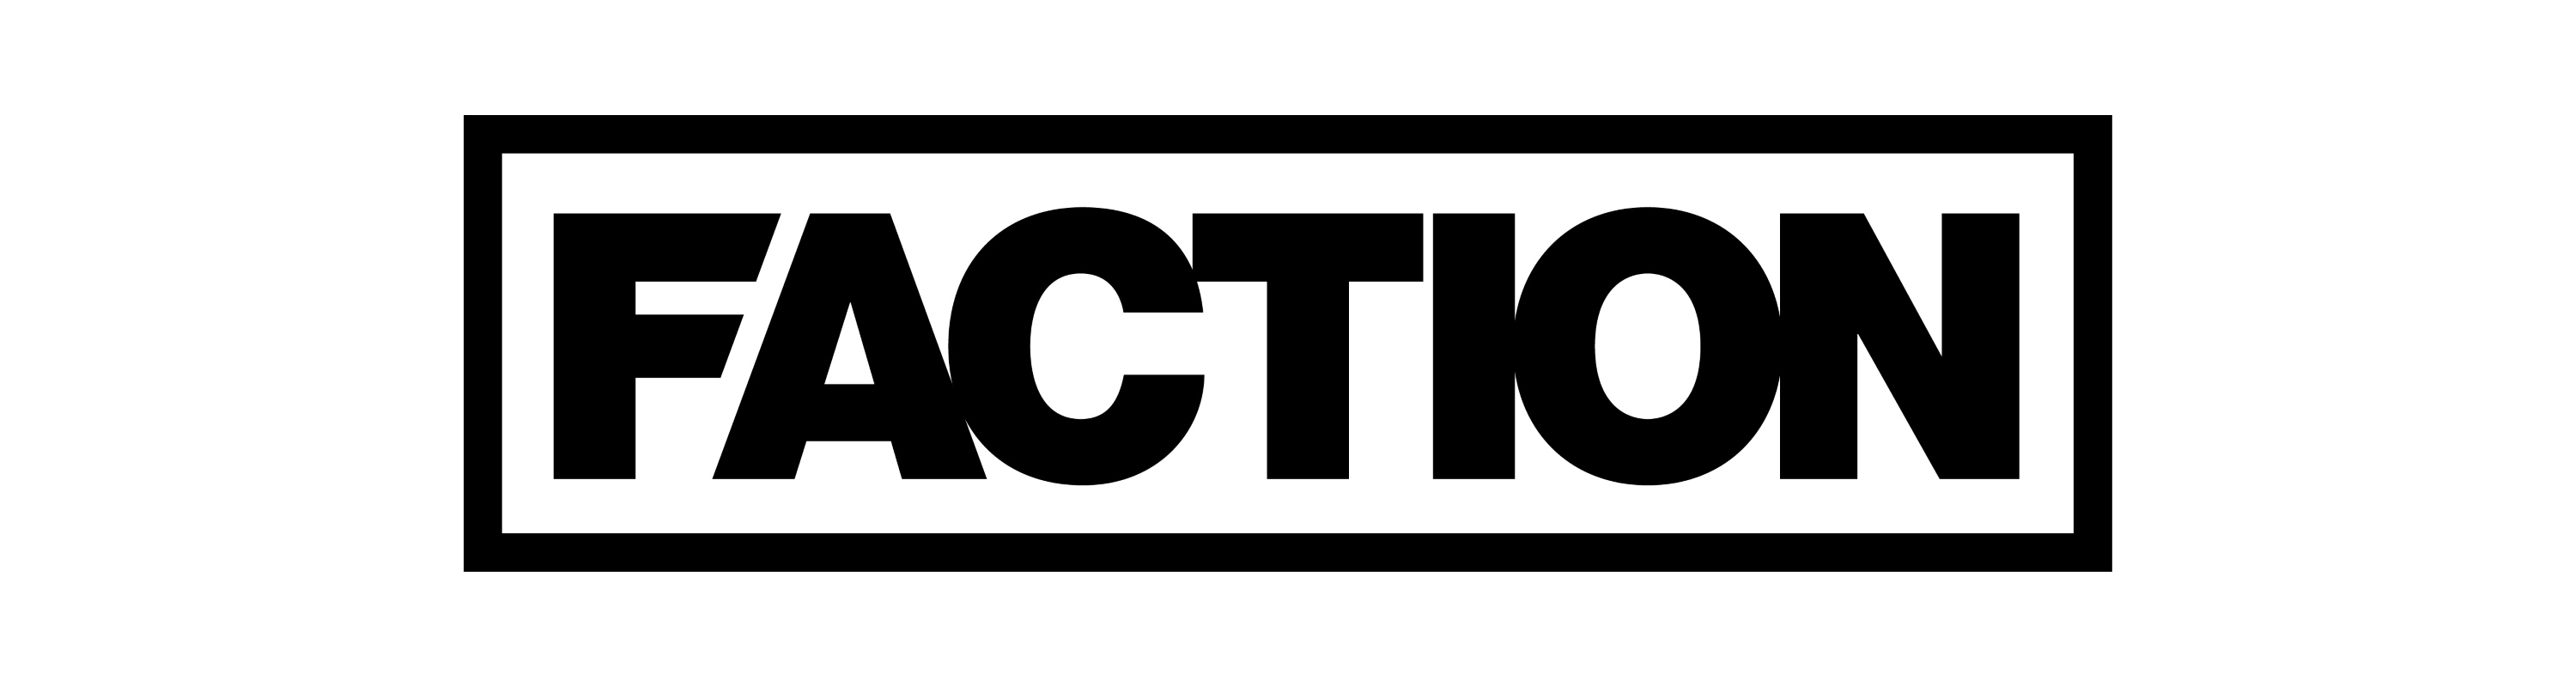 faction